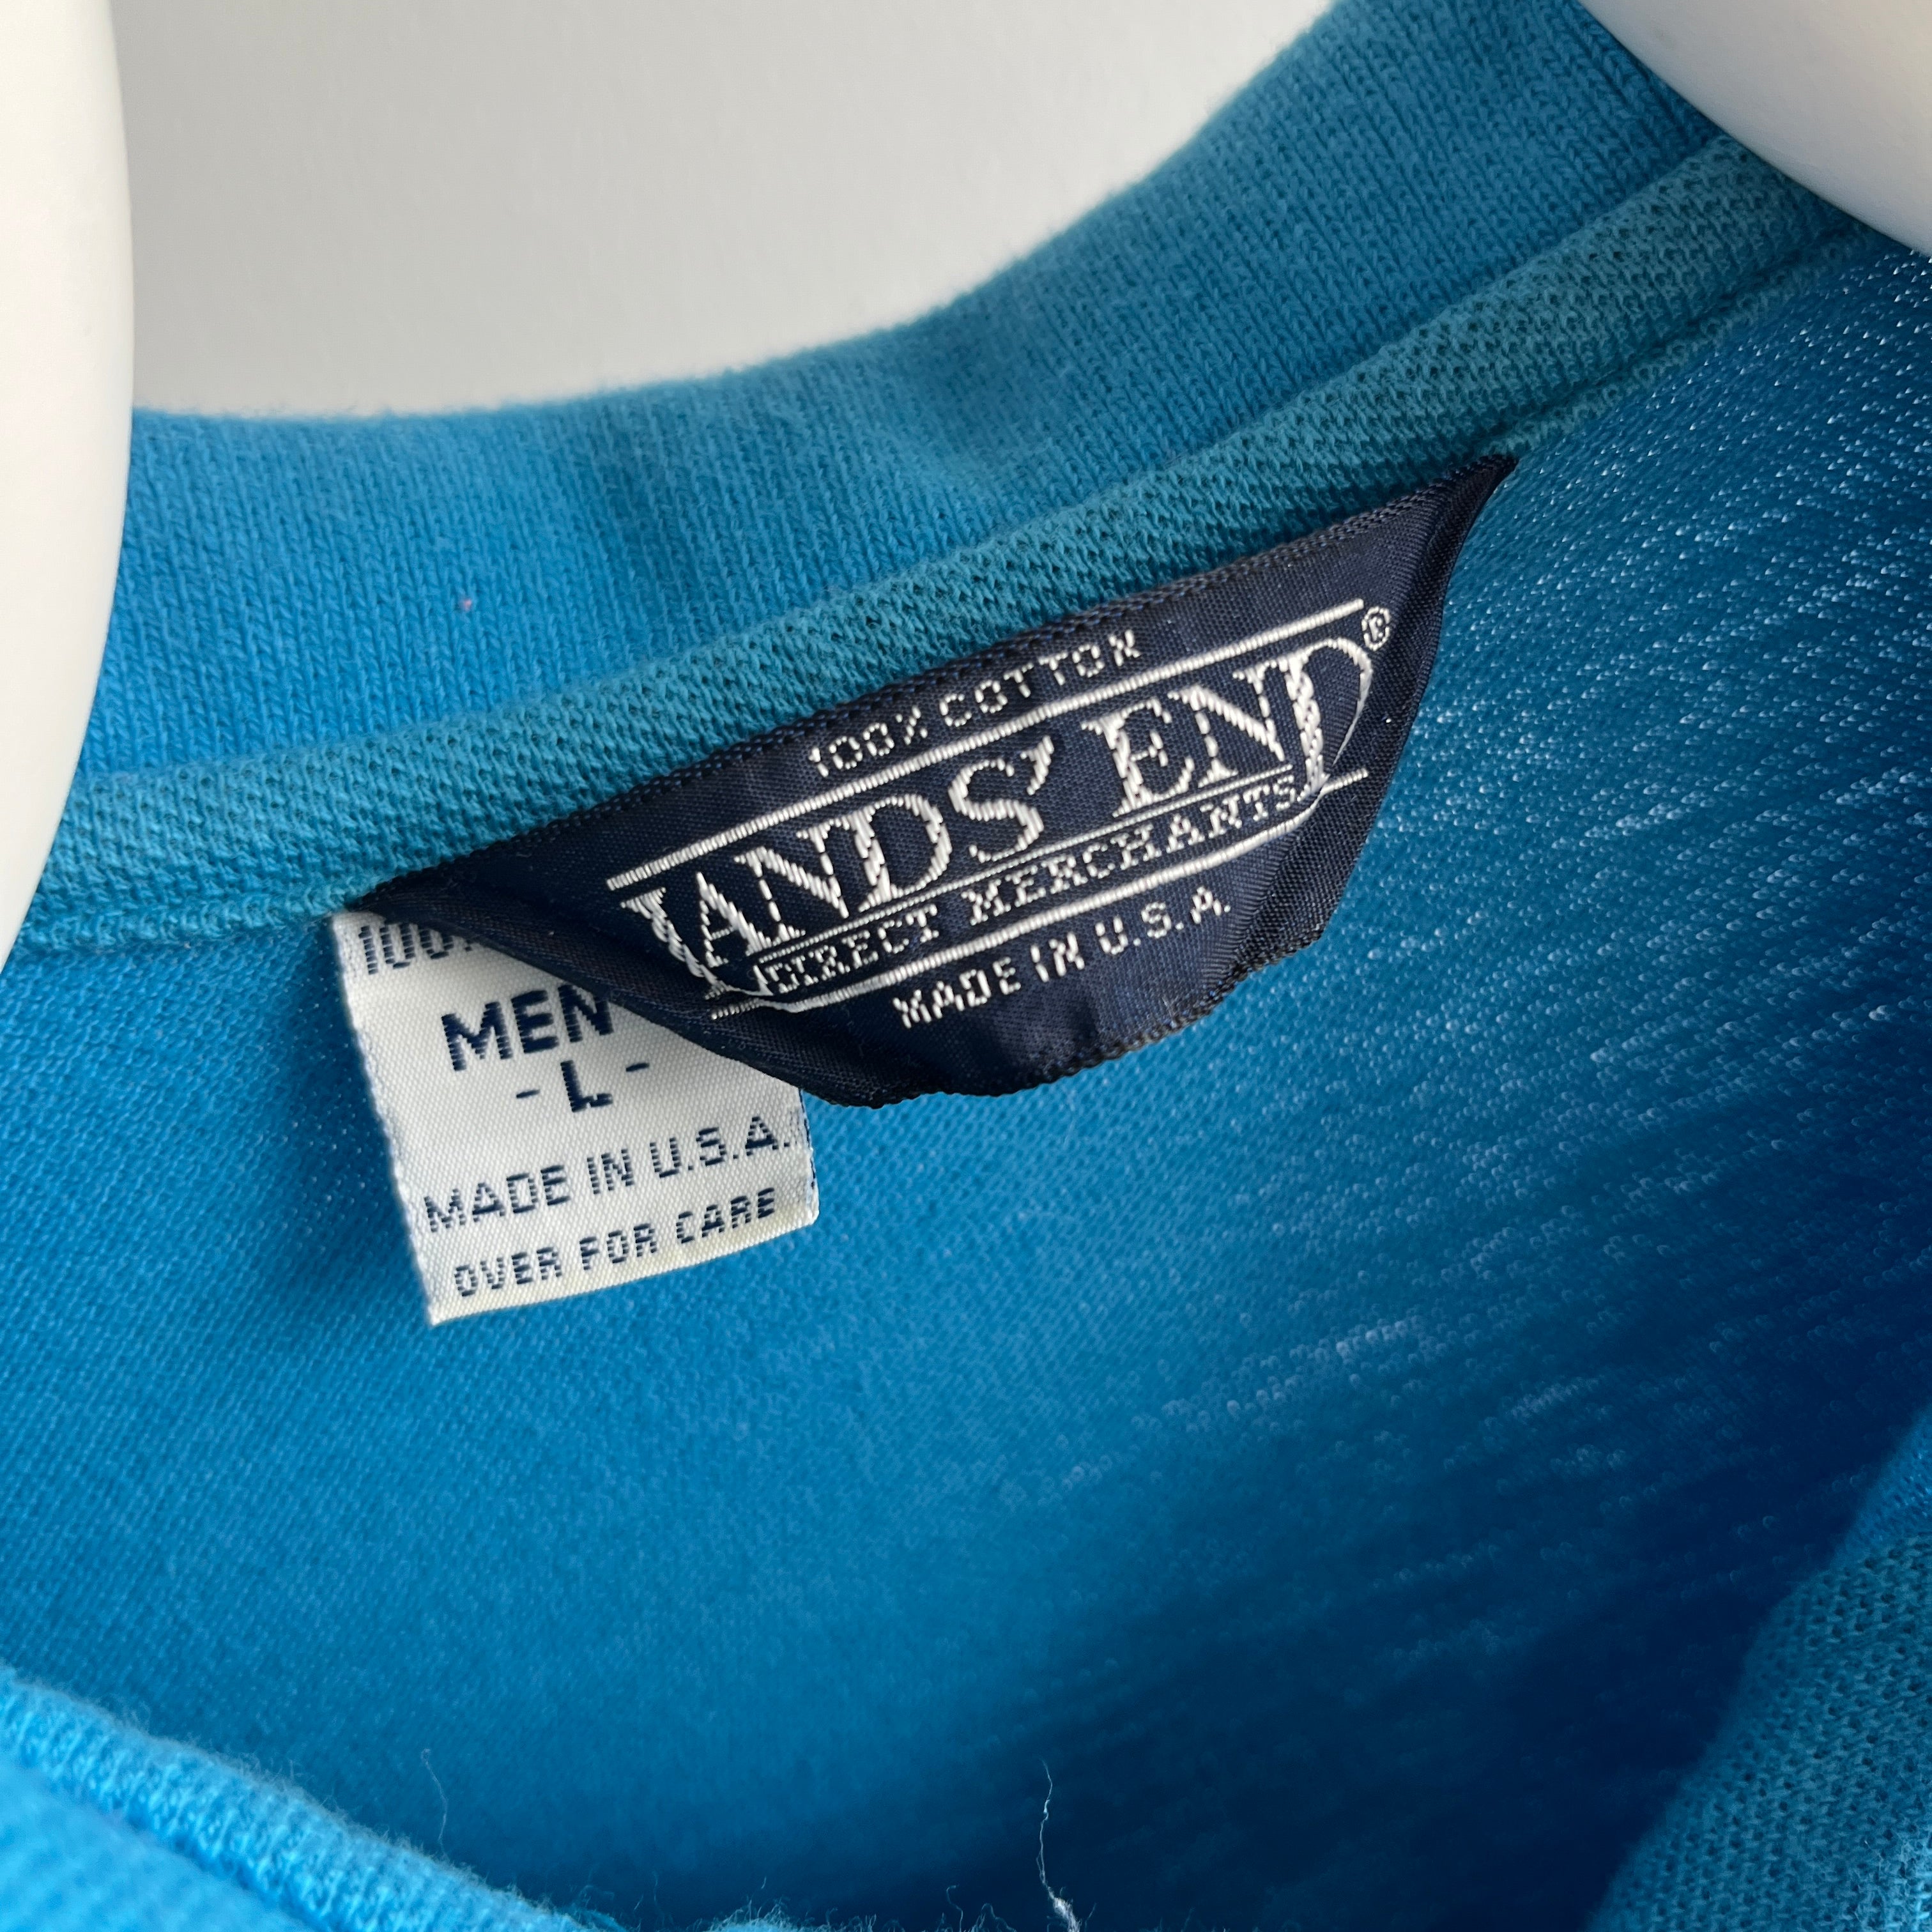 1980s USA Made Land's End Turquoise Polo Shirt